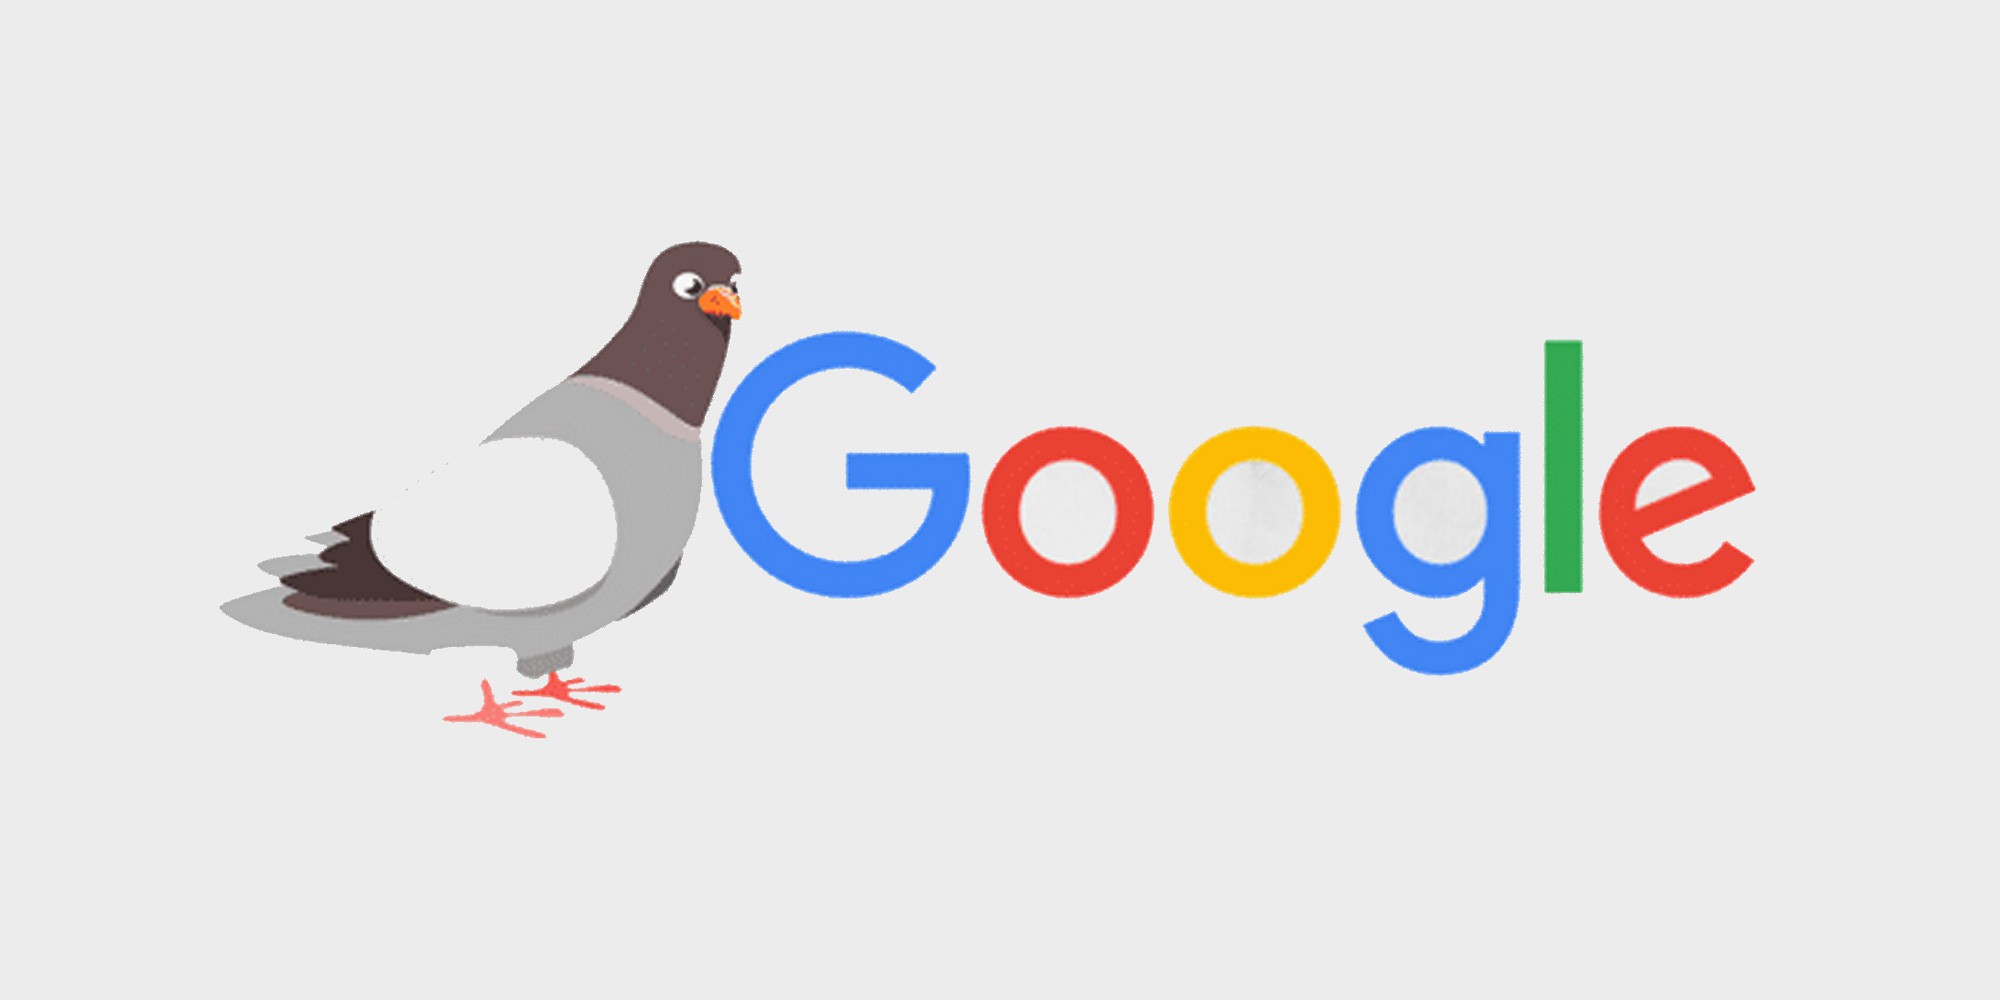 Google-Pigeon8764.jpg